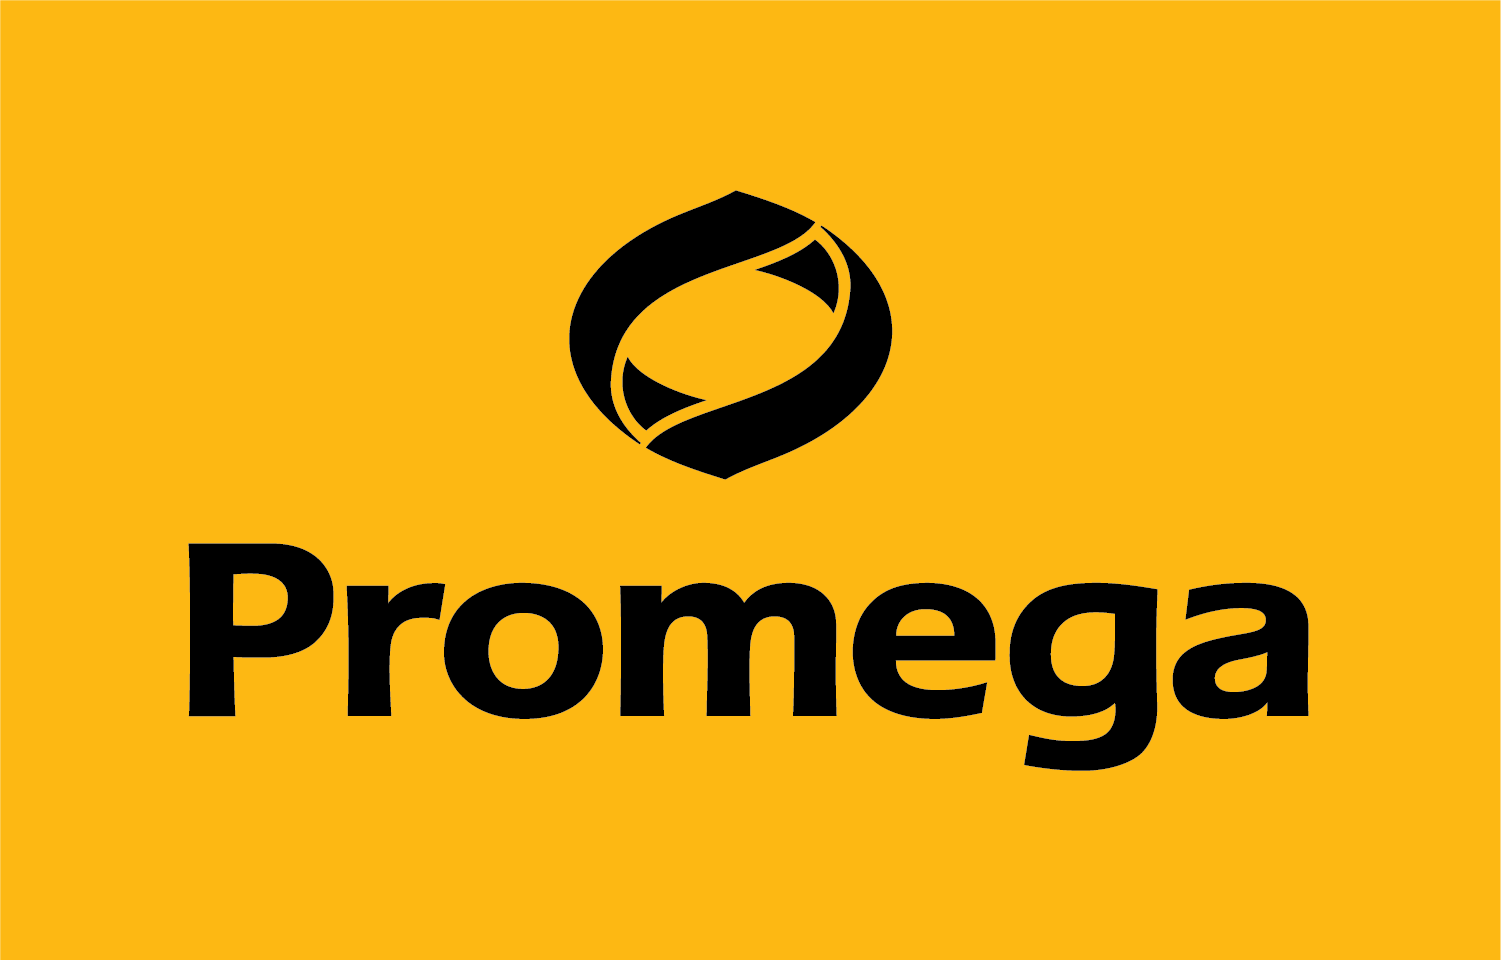 Promega Corporation logo.